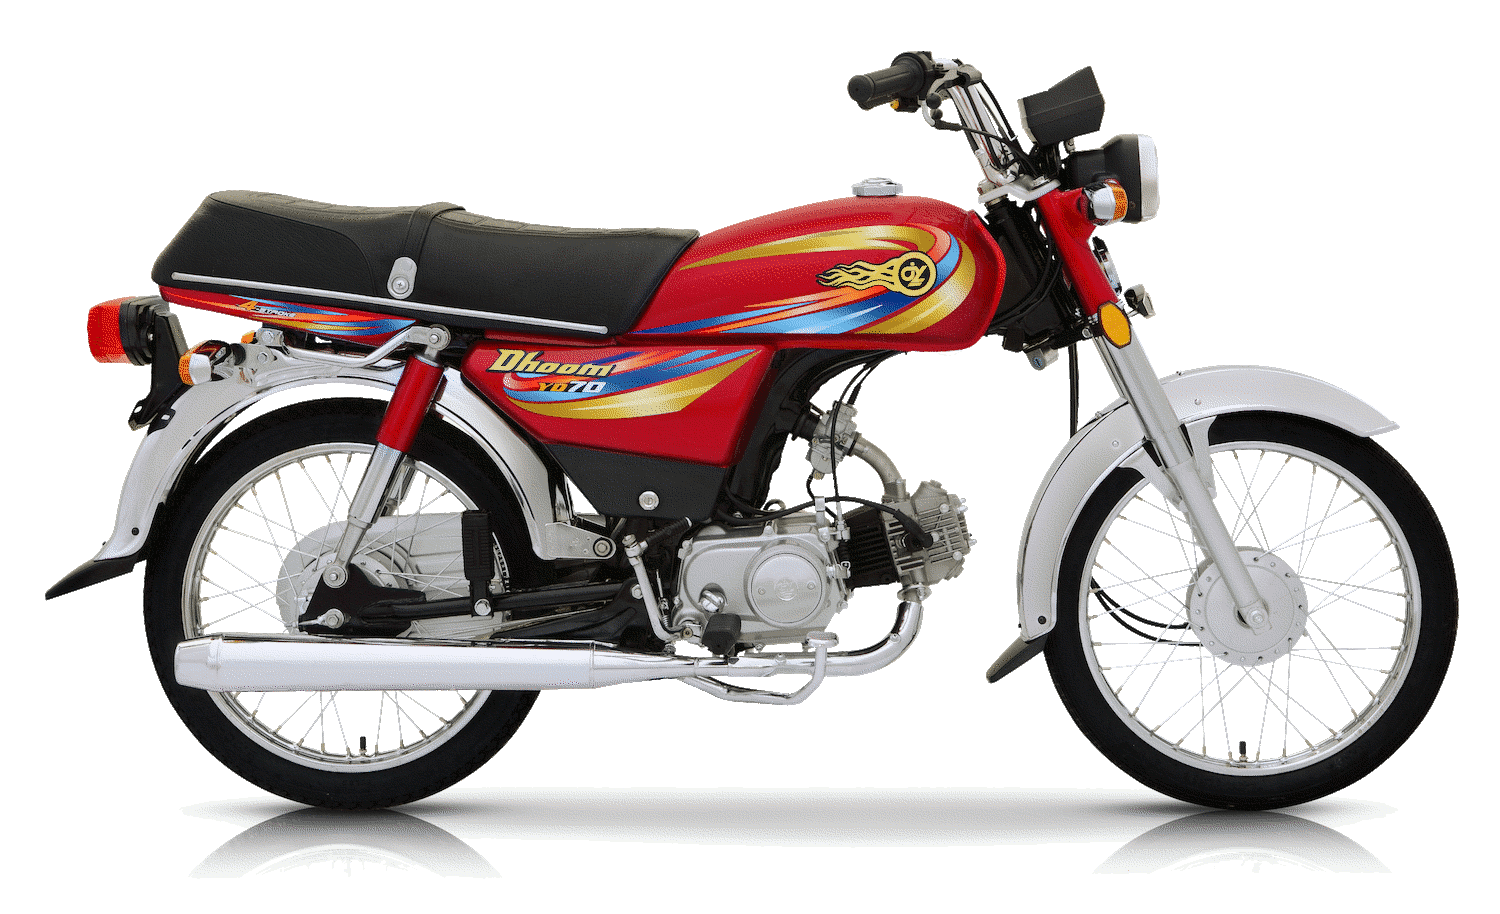 Moto Png Image, Motorcycle Png Picture Download - Honda Cd 70 Pakistan - HD Wallpaper 